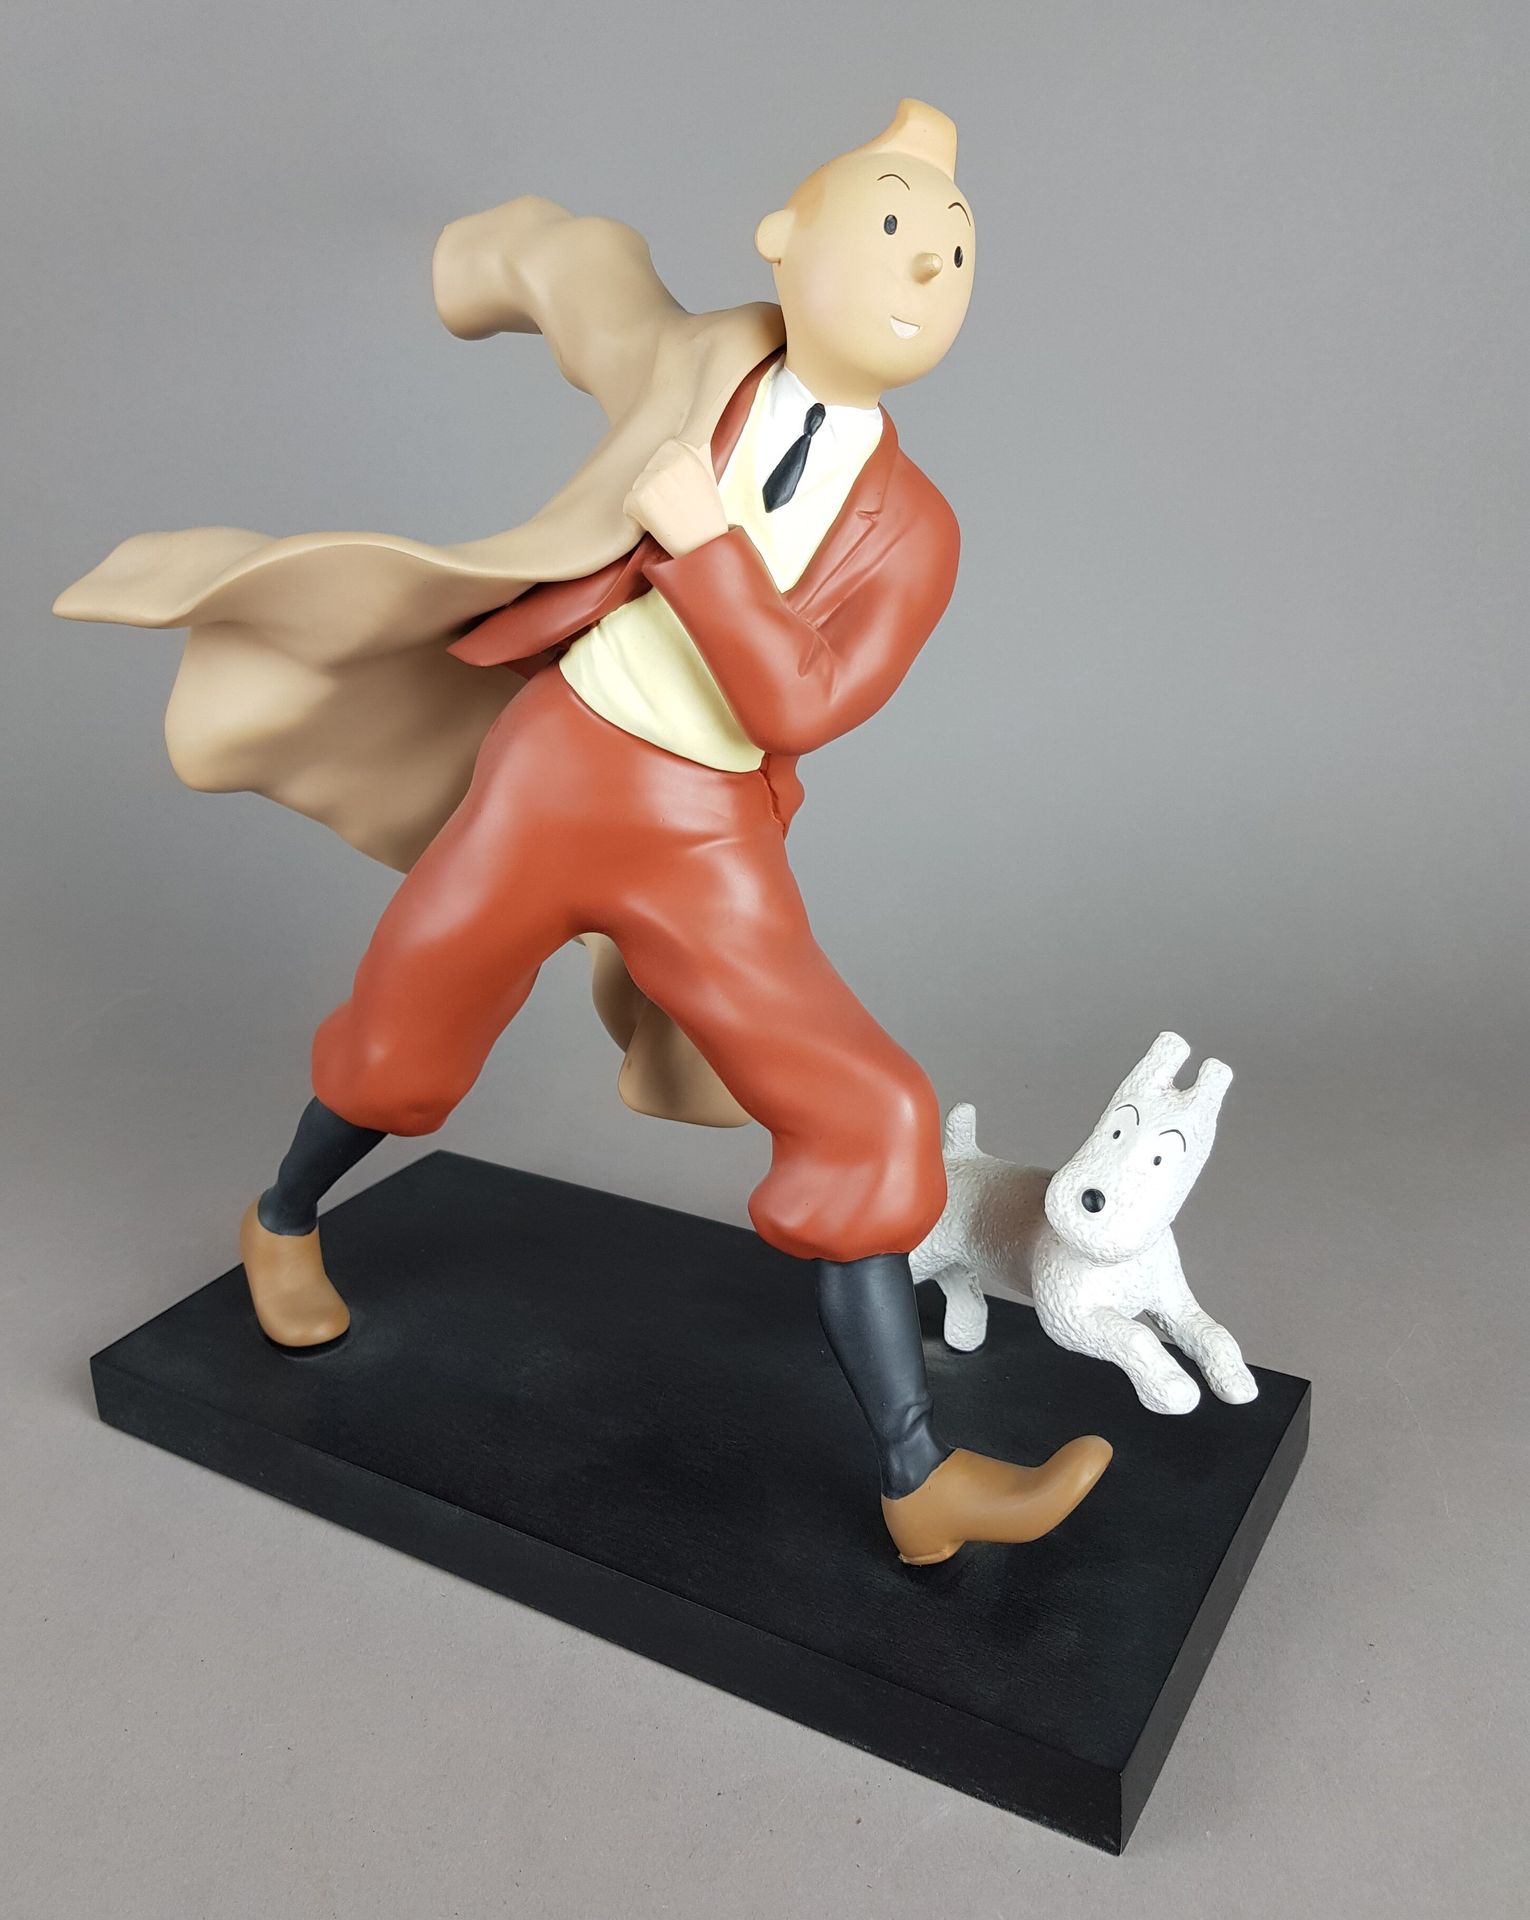 Null LEBLON-DELIENNE - Tintin reporter

SUBJECT in polychrome resin representing&hellip;